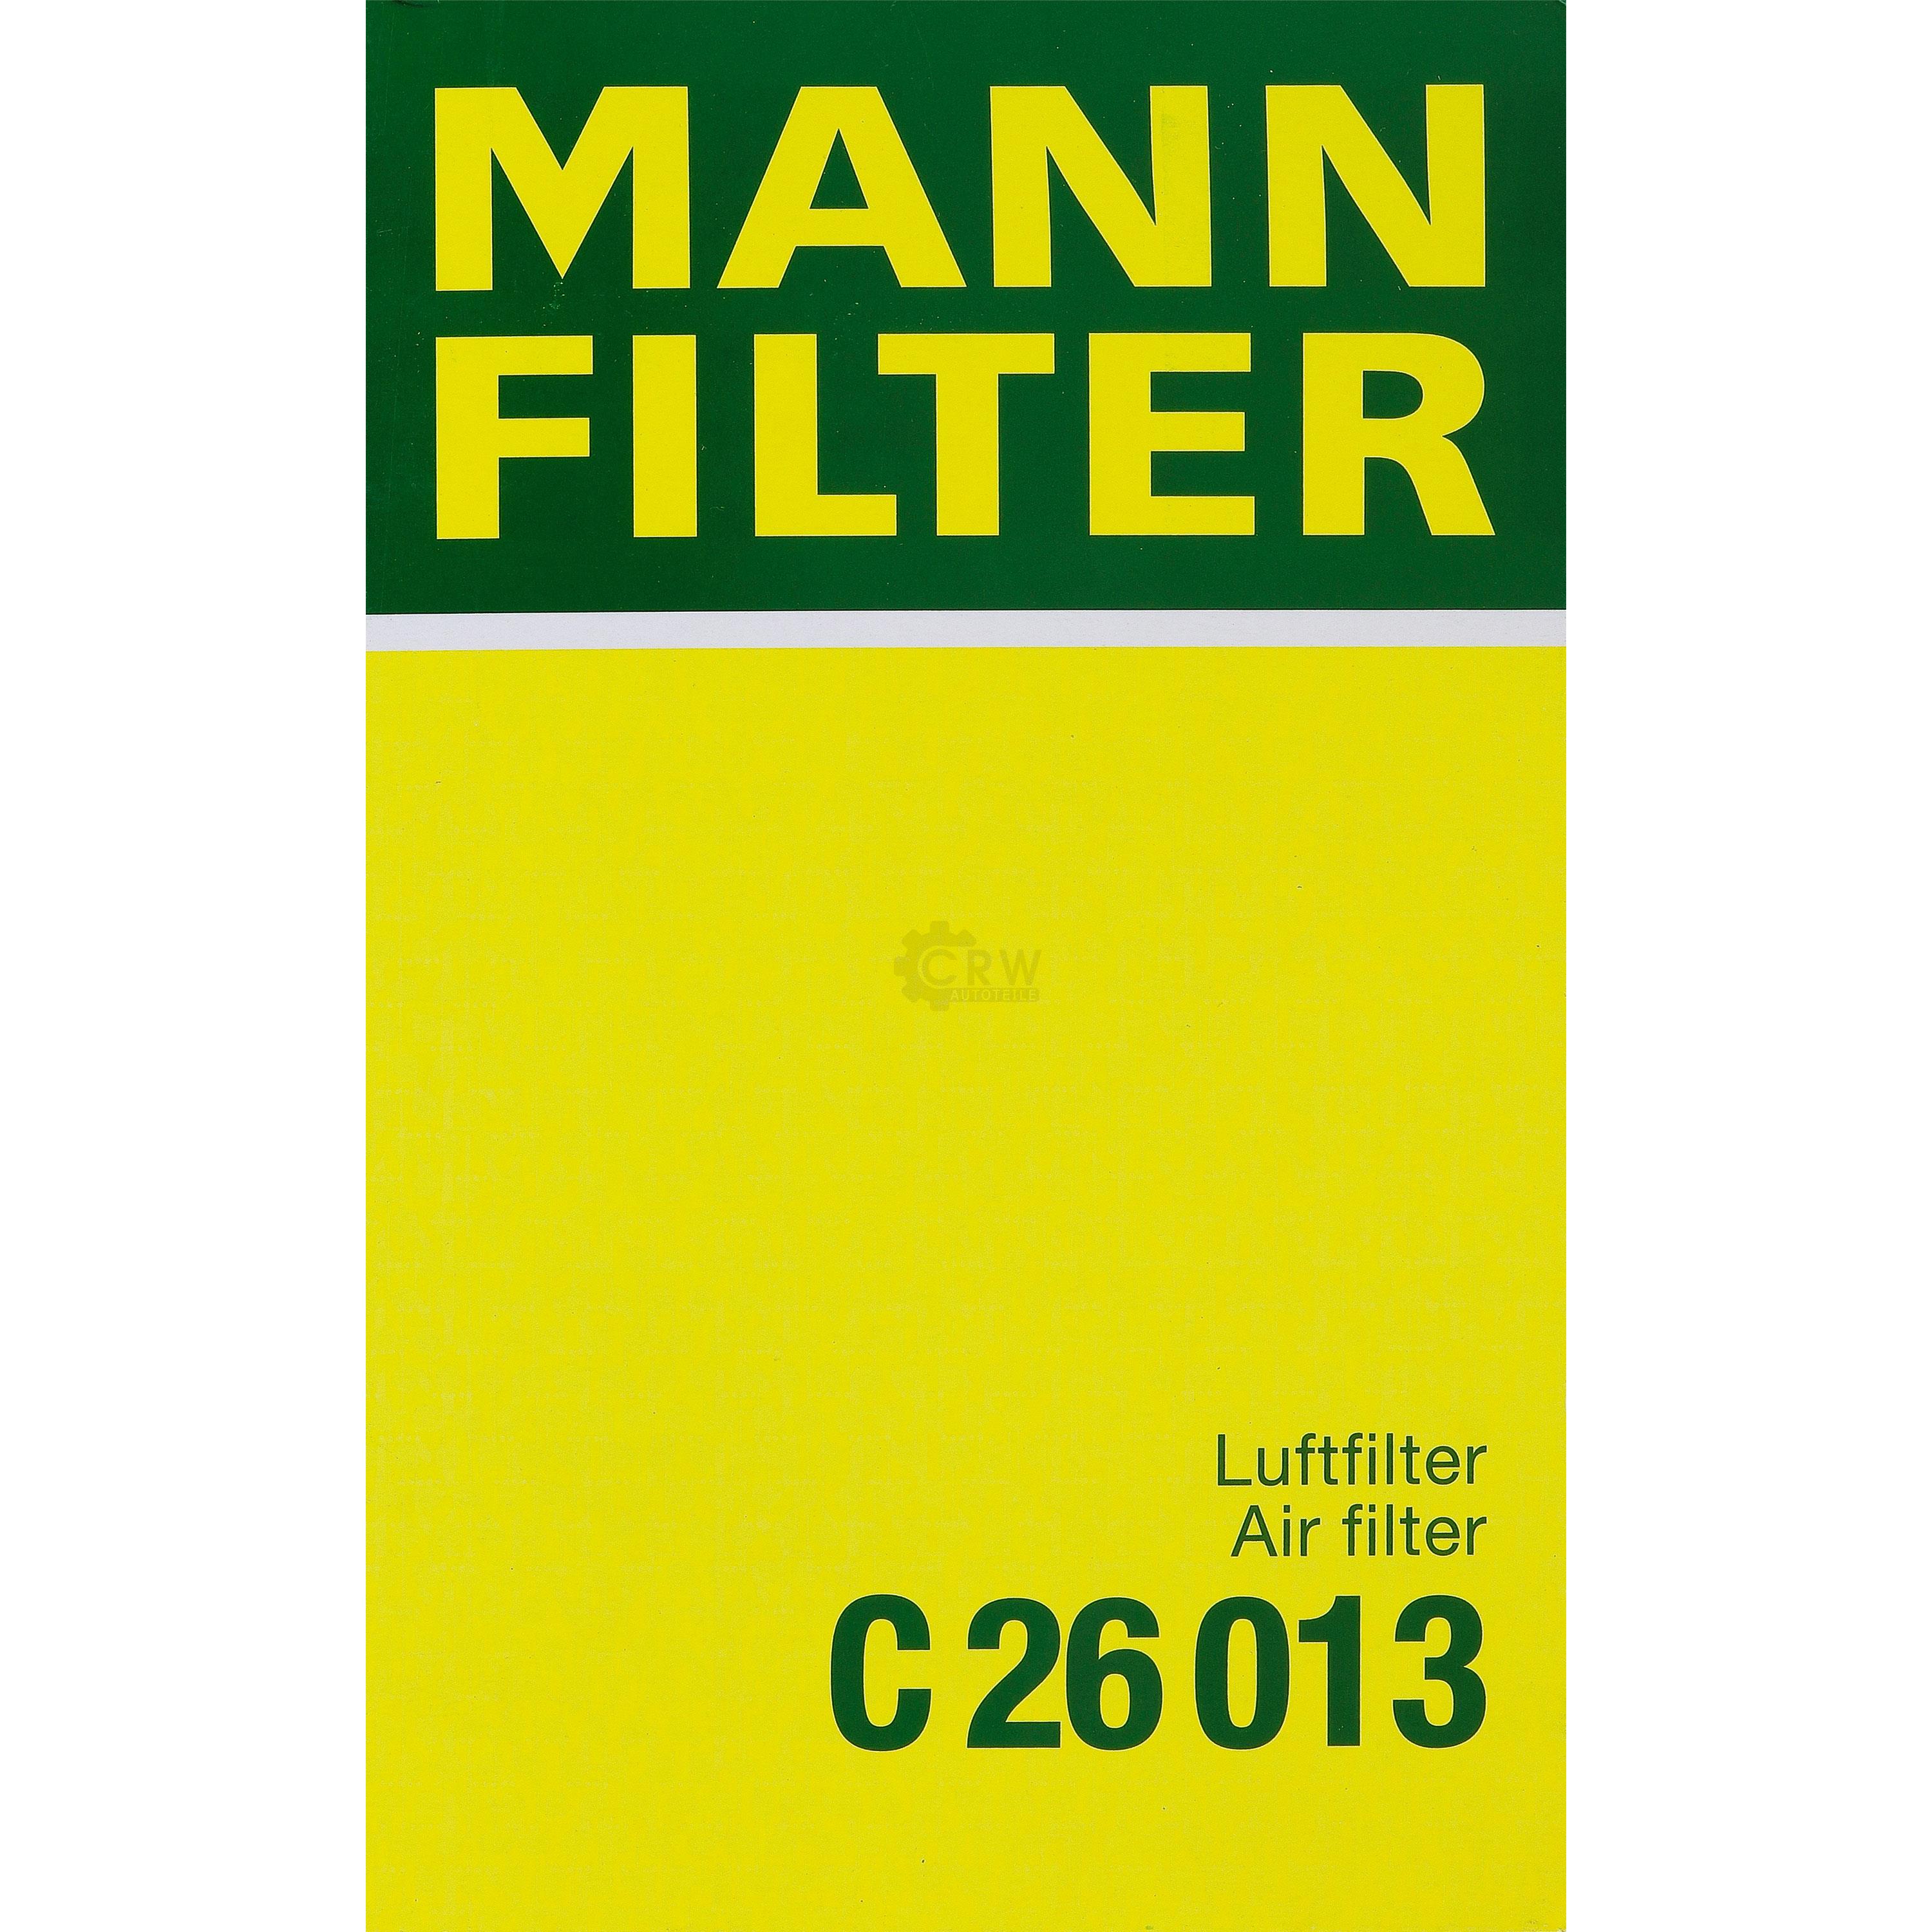 MANN-FILTER Luftfilter für Hyundai IX35 LM EL ELH 1.6 2.0 4WD 1.7 CRDi iX35